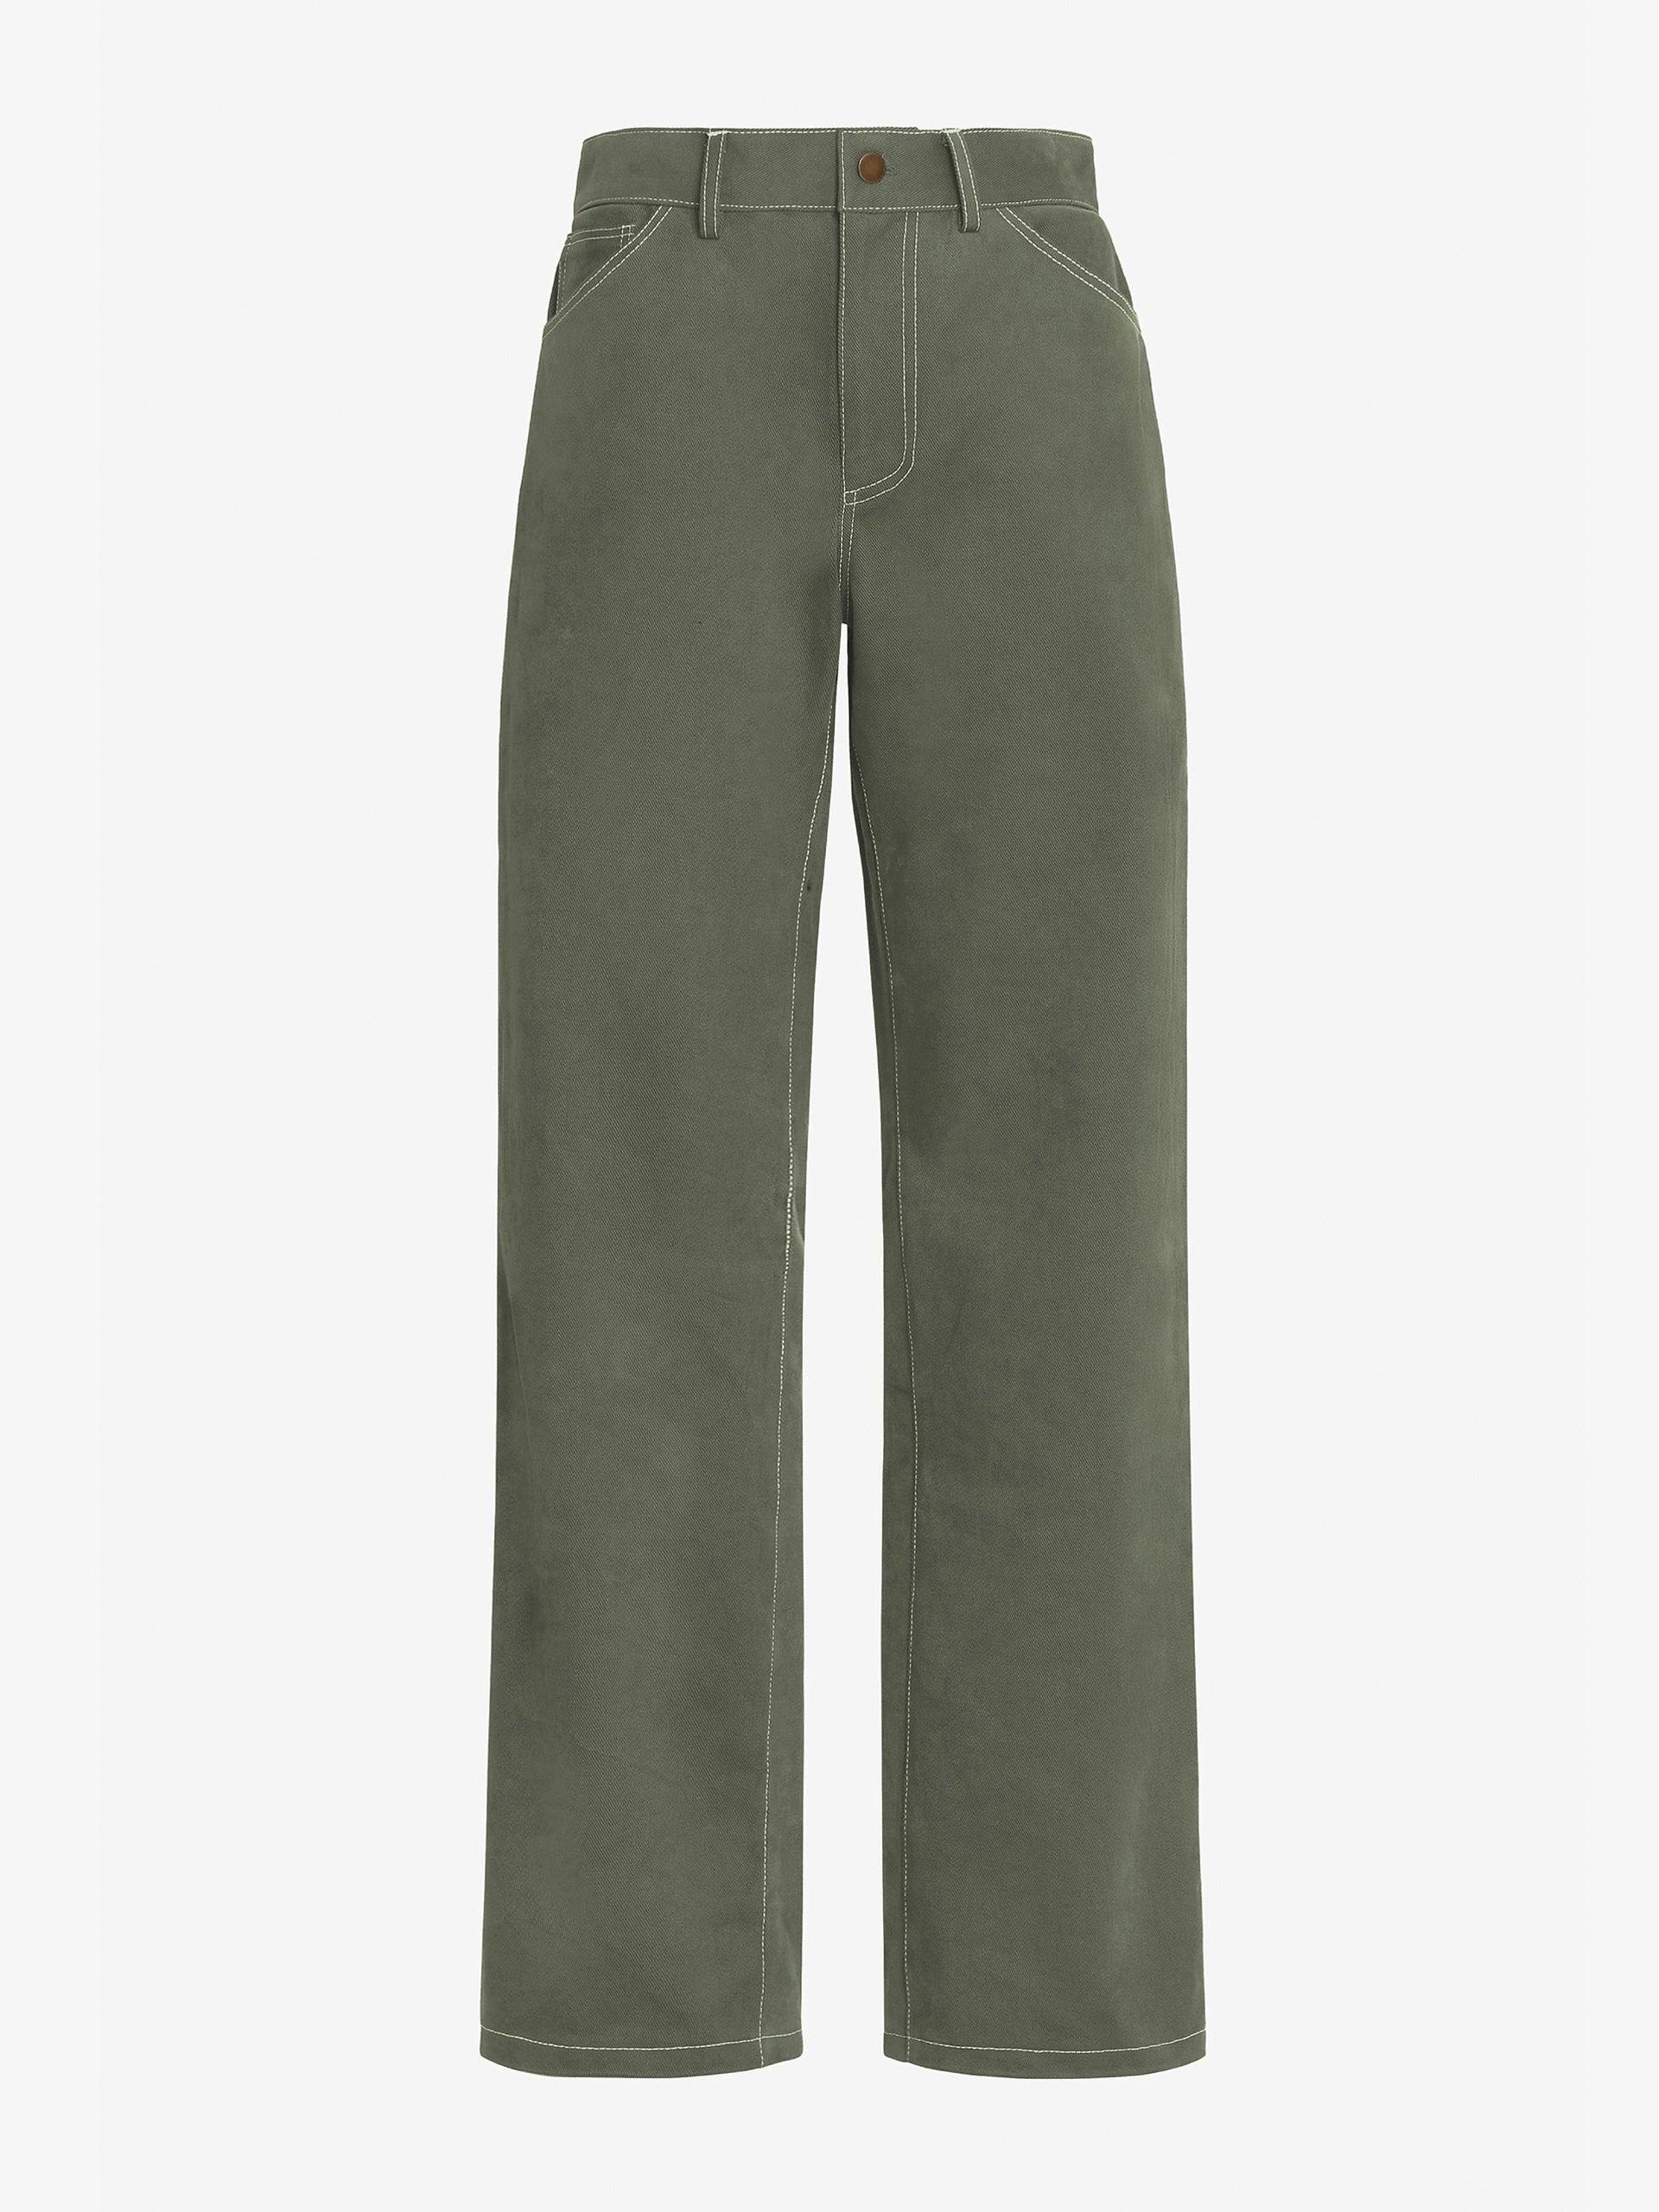 Brushed cotton sage green Lenny trouser